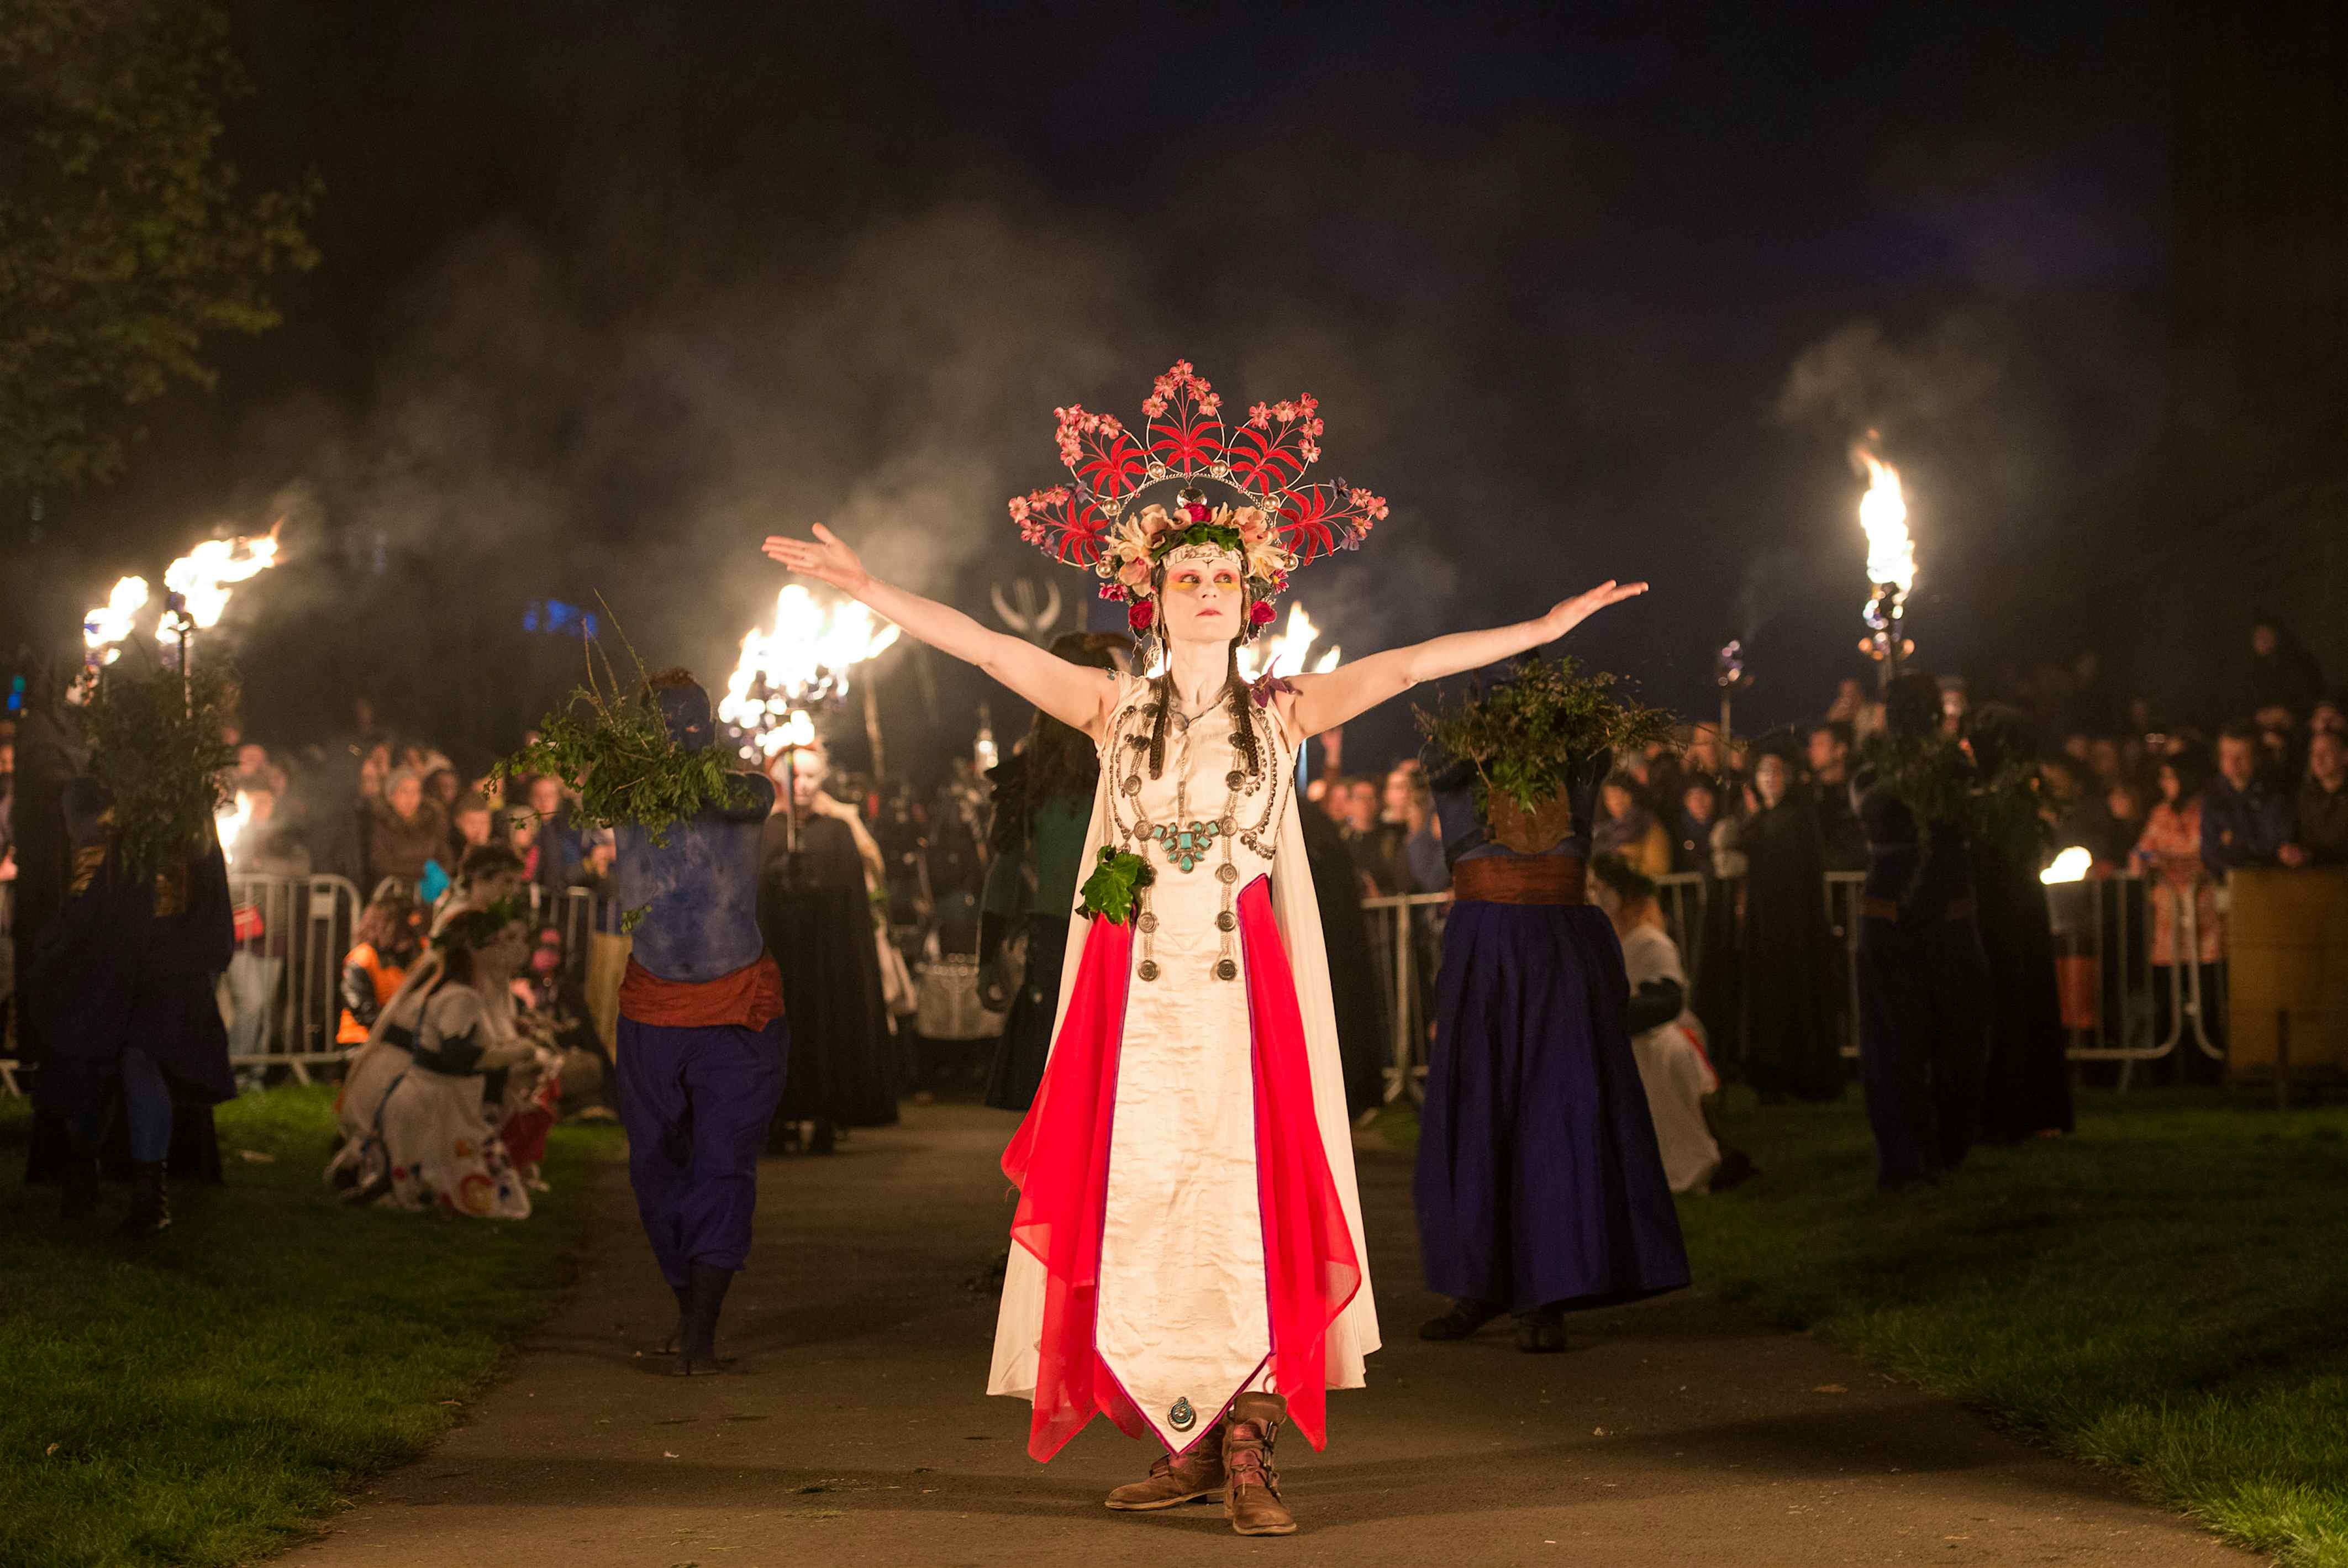 Edinburgh’s Beltane Fire Festival celebrates the rebirth of summer with